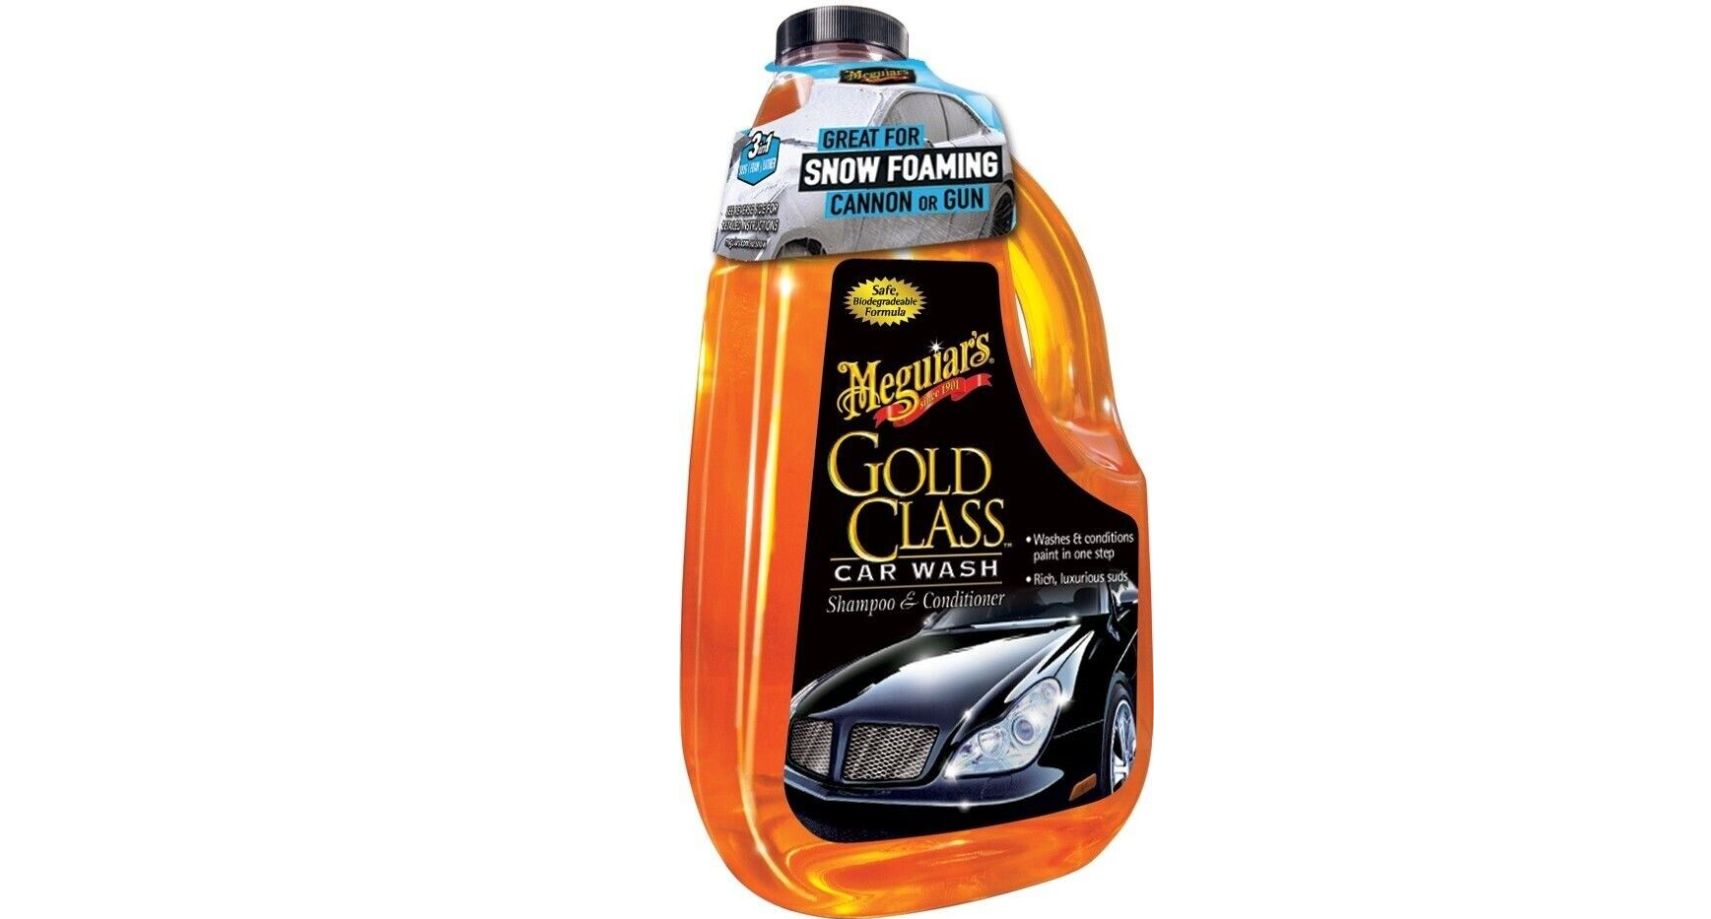 Meguiars Gold Class Car Wash Shampoo 1.89L G7164 $25.56(was $31.95) delivered @ eBay